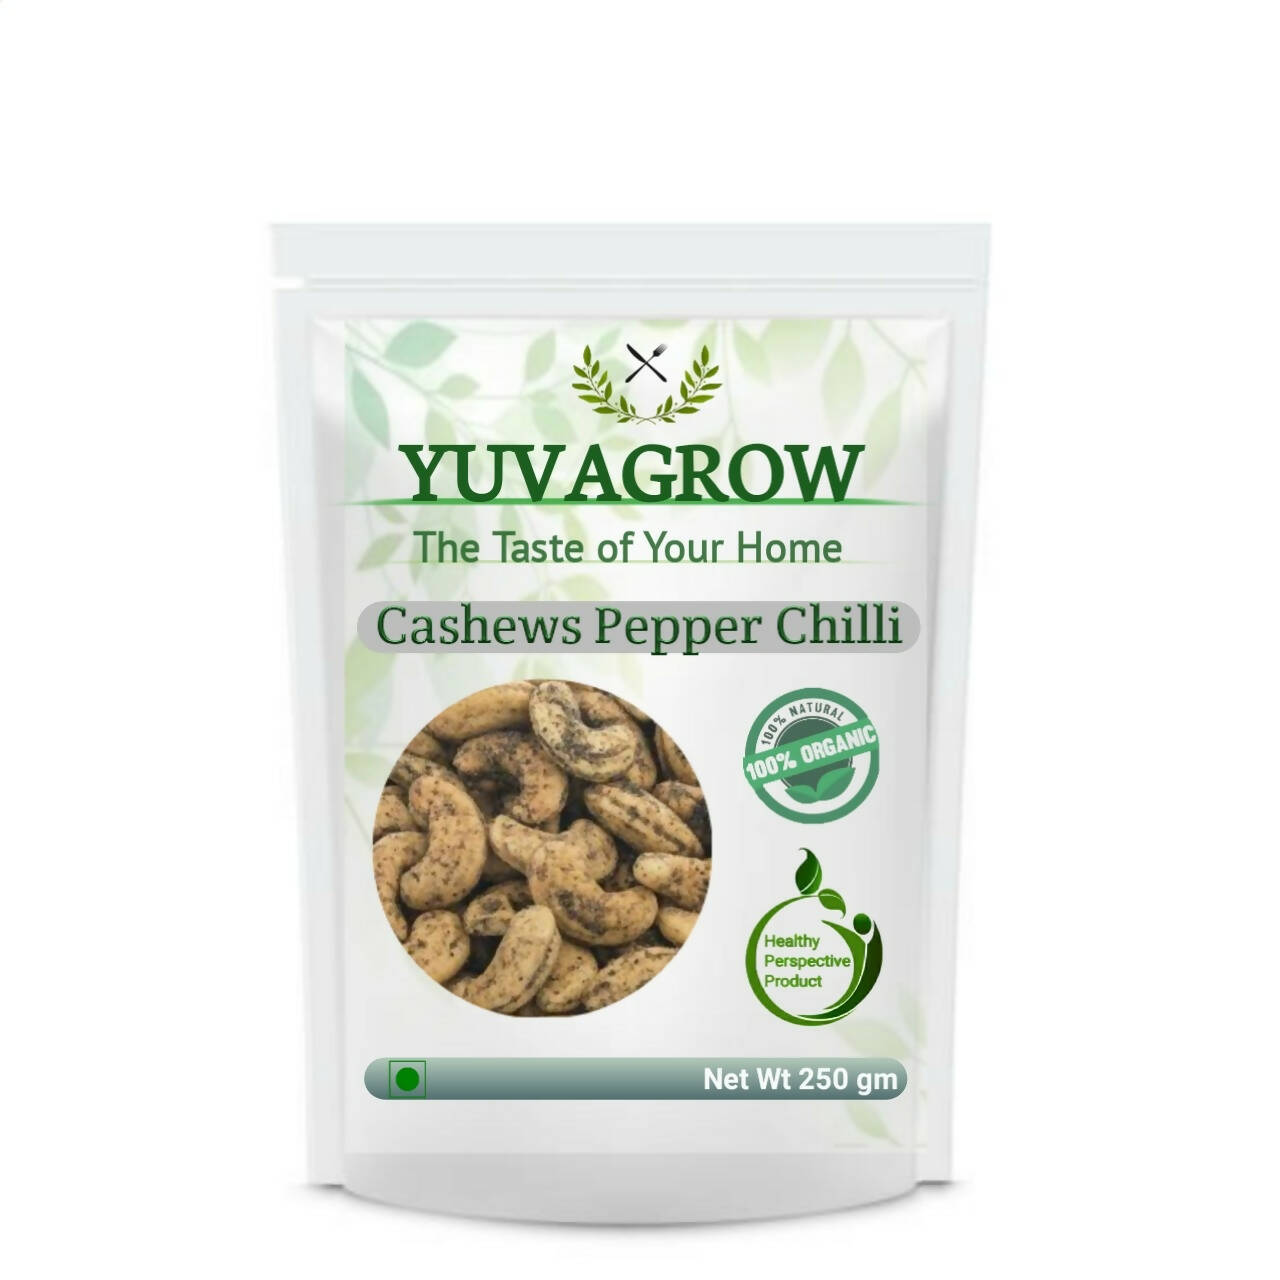 Yuvagrow Cashews Pepper Chilli - buy in USA, Australia, Canada